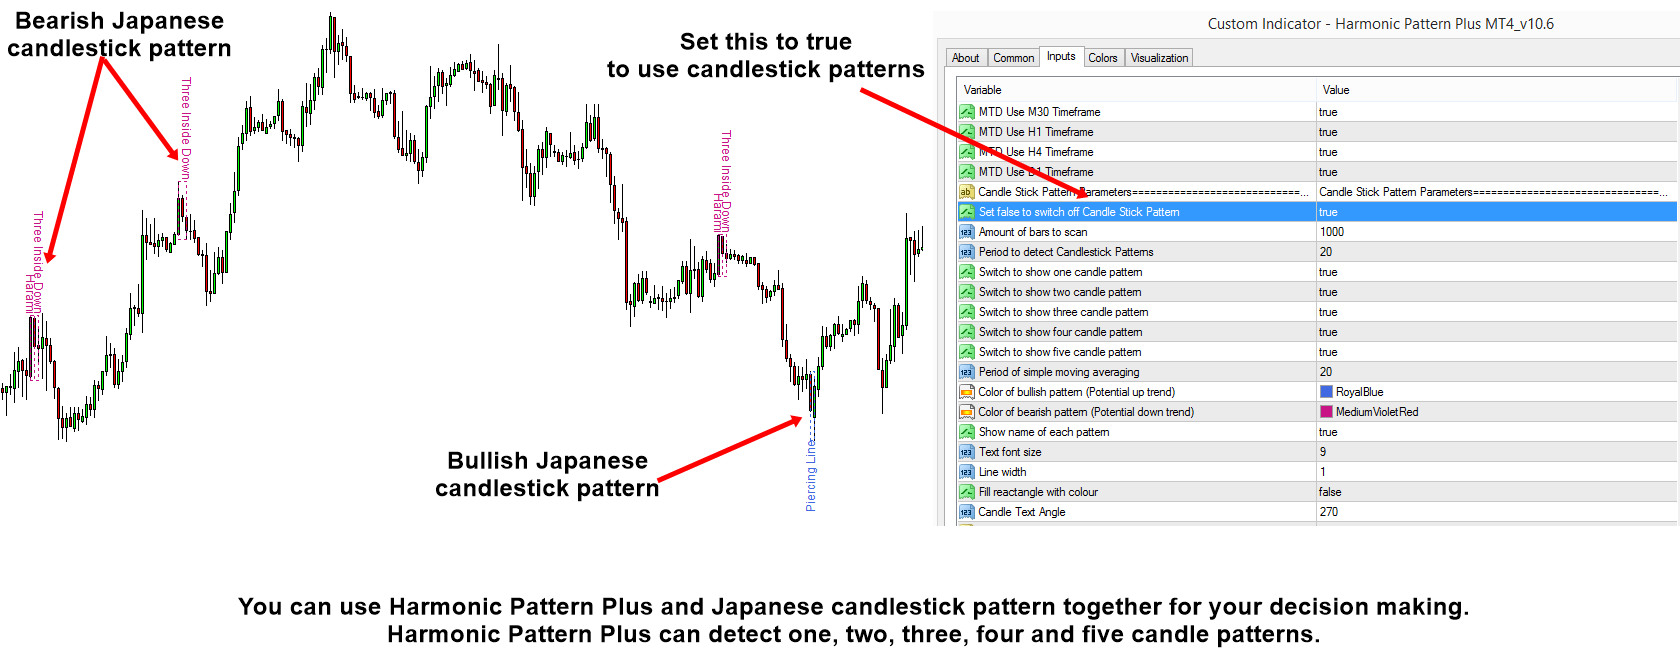 Japanese Candlestick Pattern with Harmonic Pattern